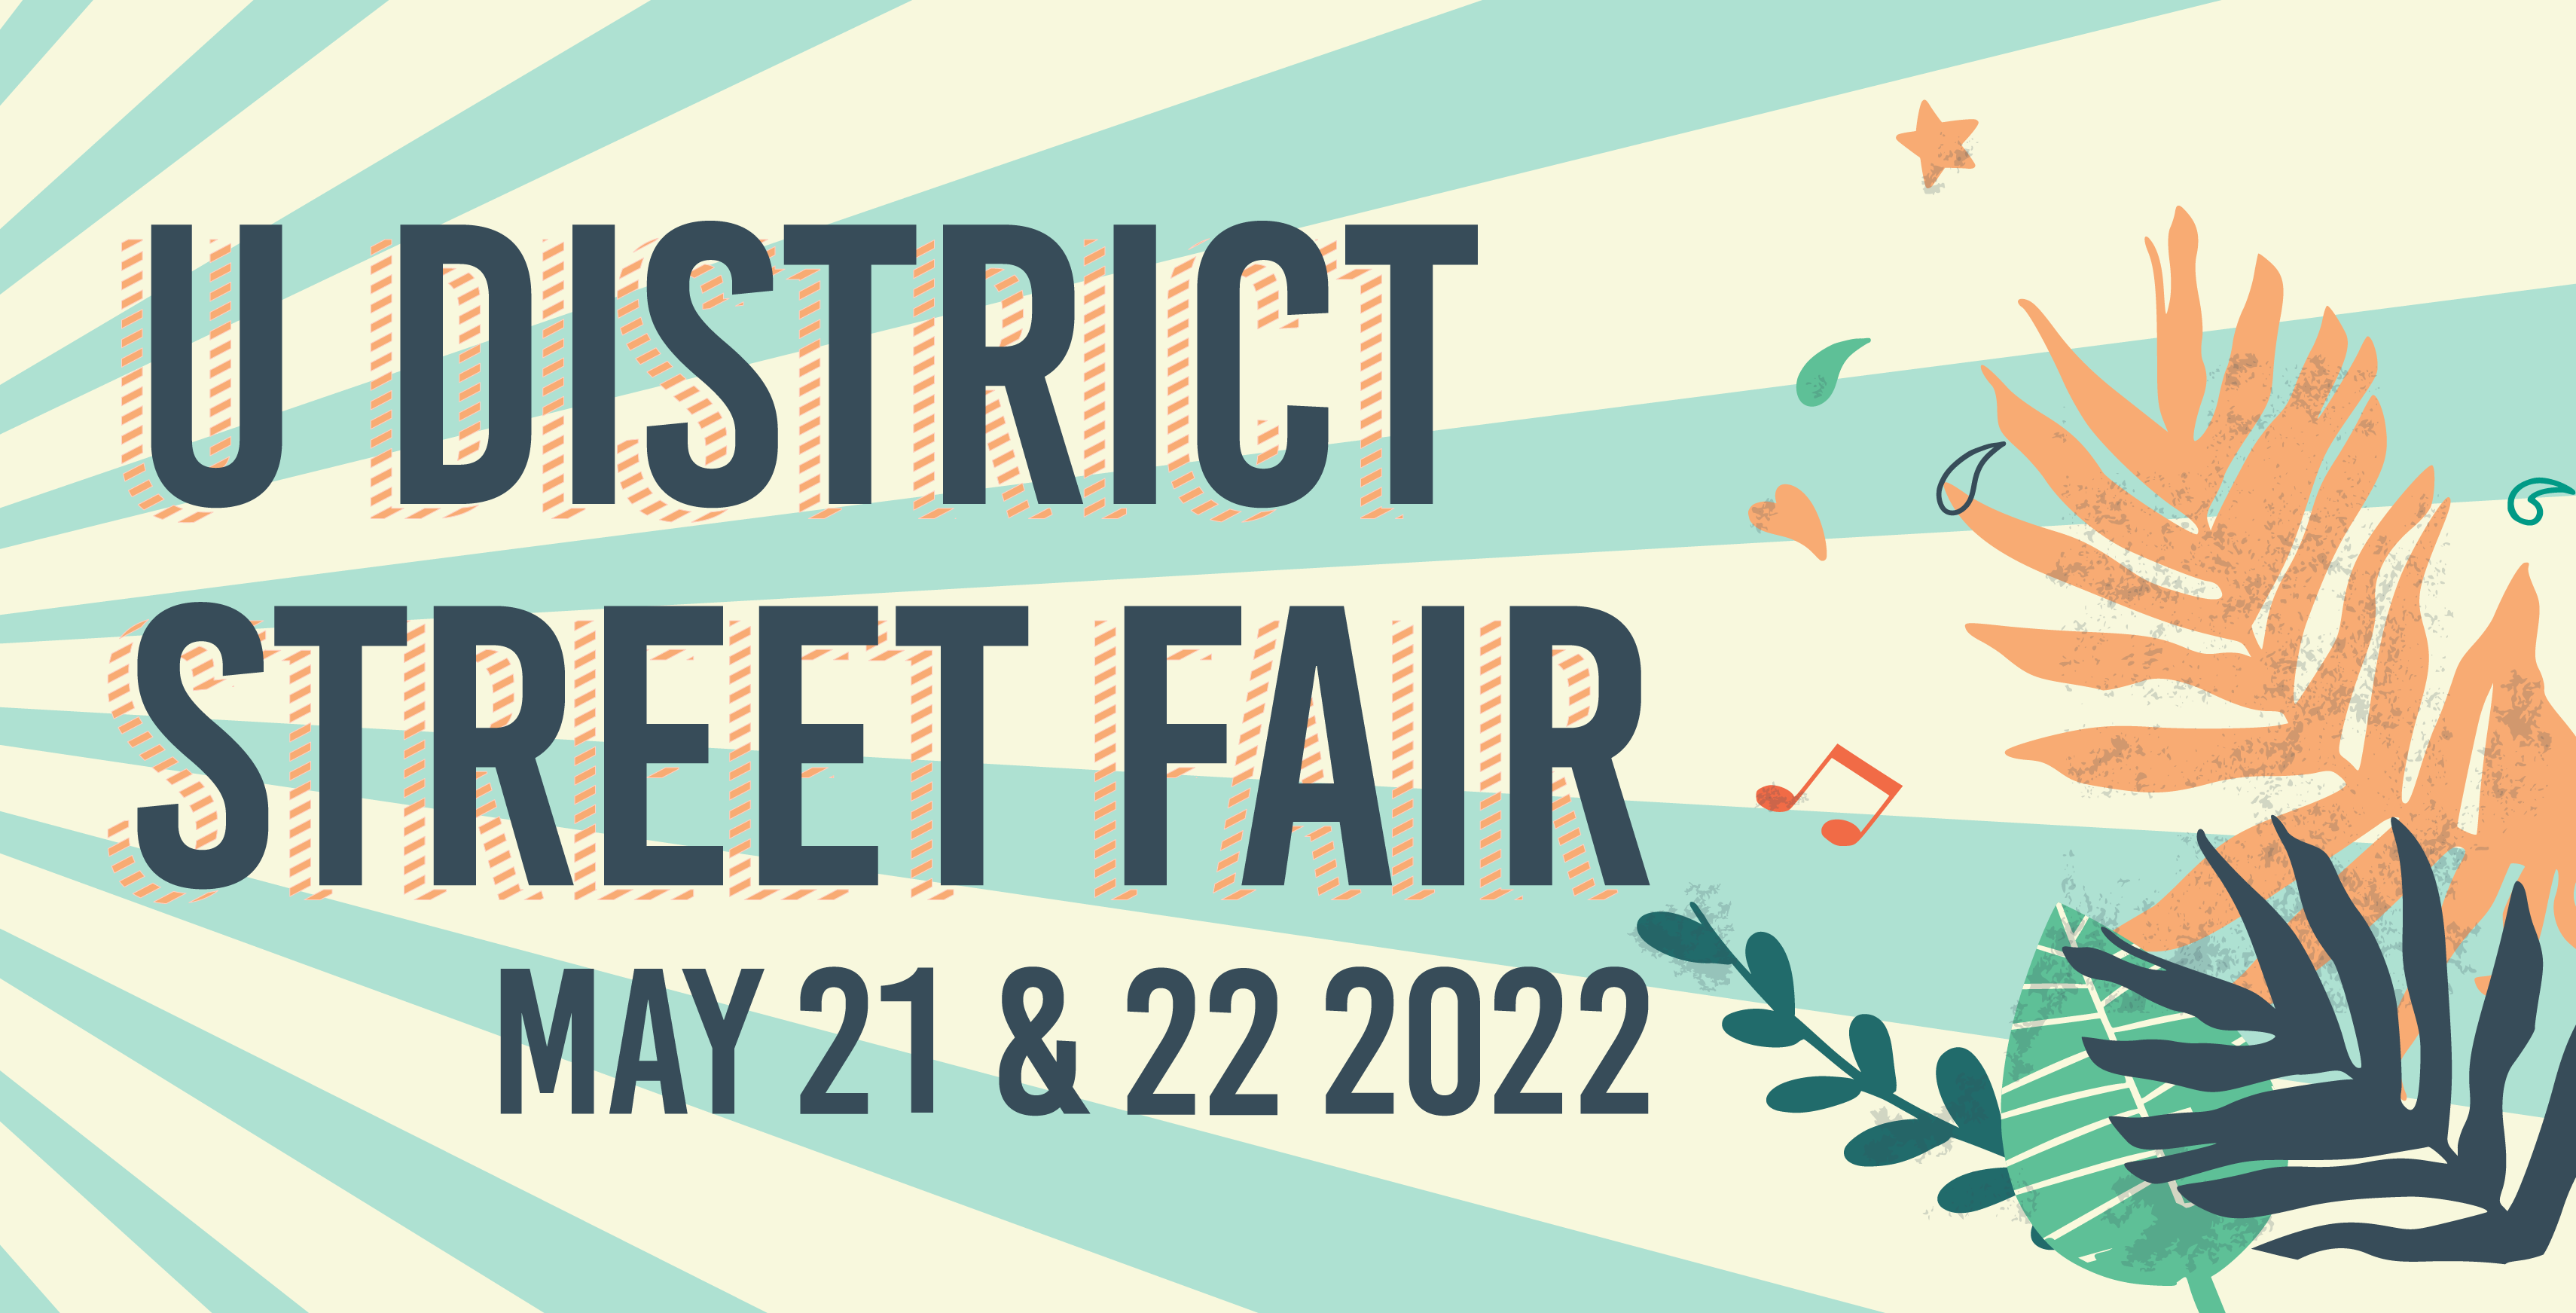 U District Street Fair Flyer